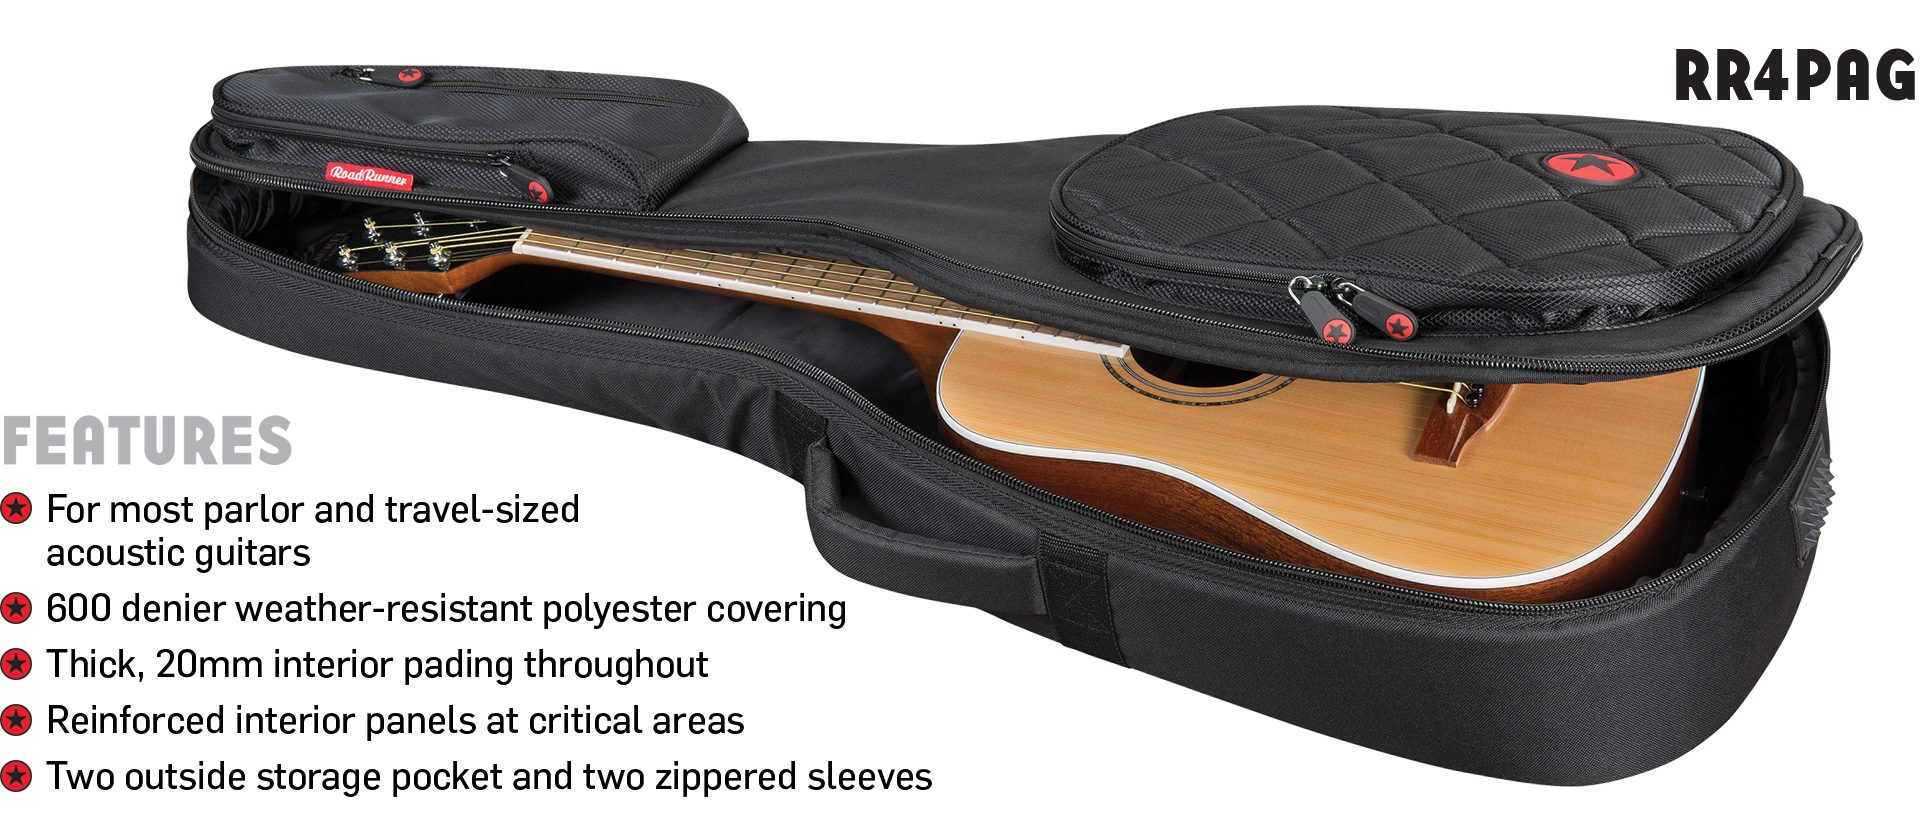 Parlor Acoustic Guitar Gig Bag Road Runner Boulevard RR4PAG